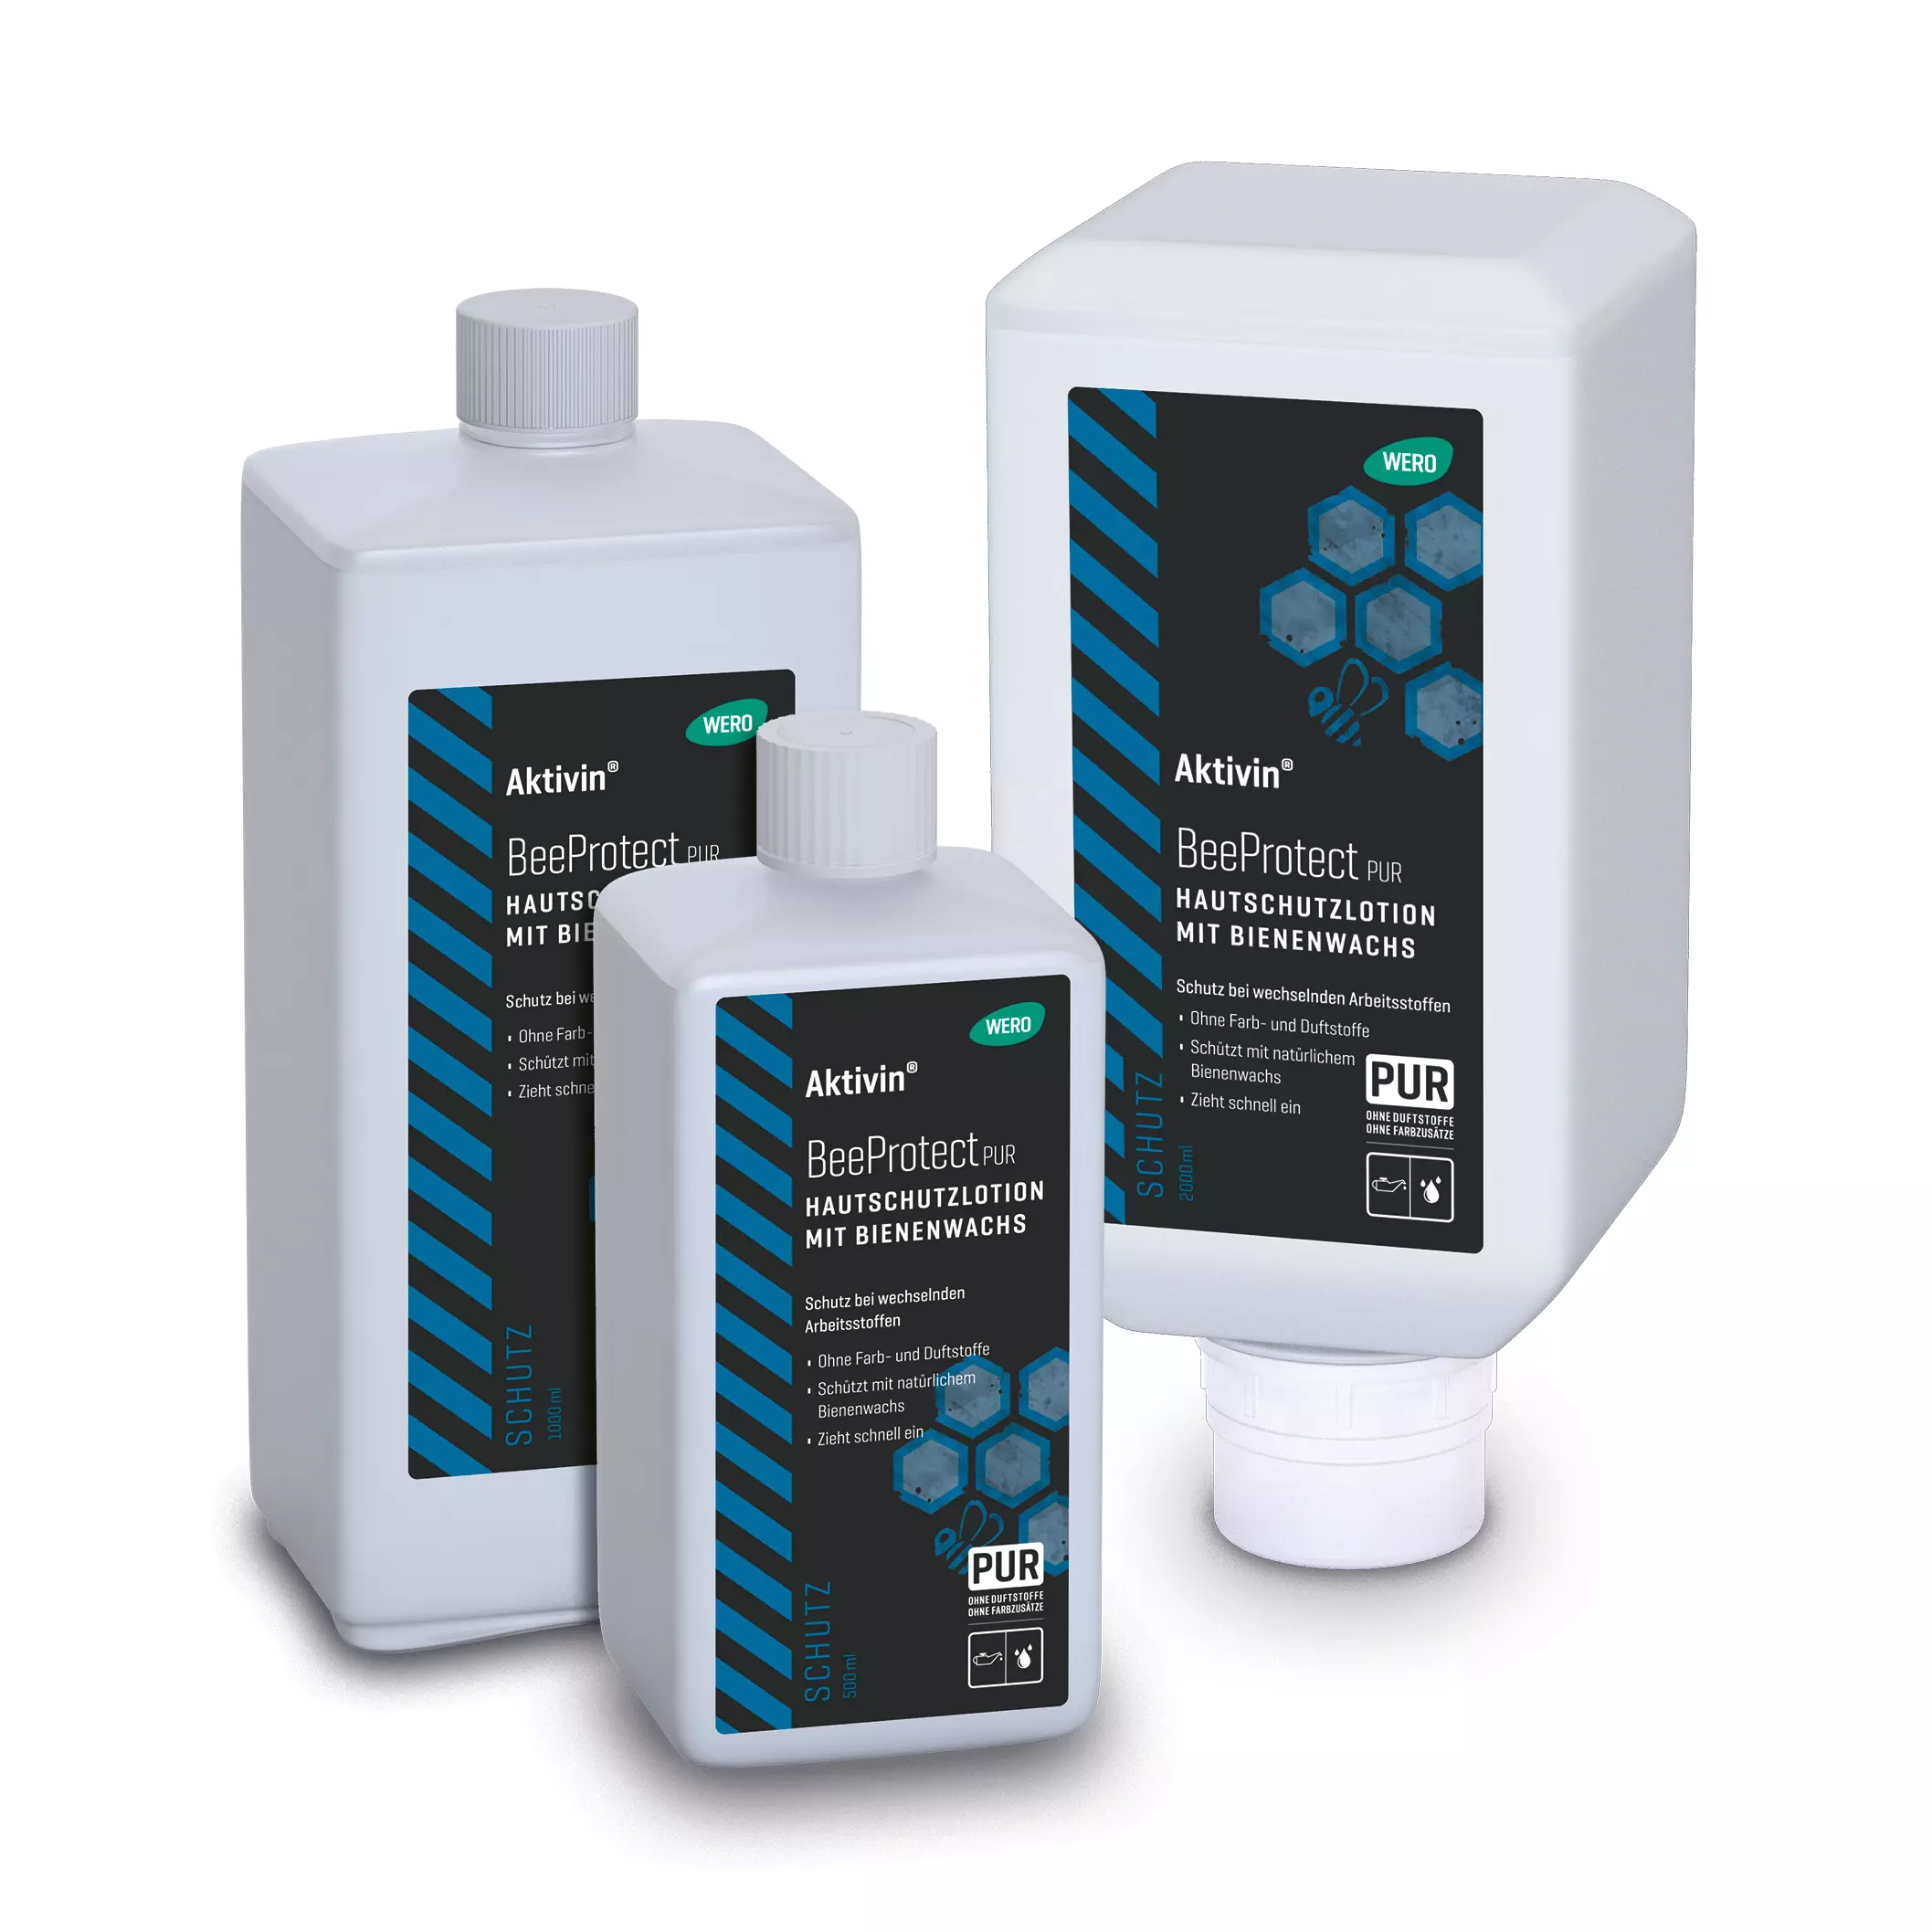 Hautschutzlotion Aktivin® BeeProtect PUR - Softflasche, 2.000 ml